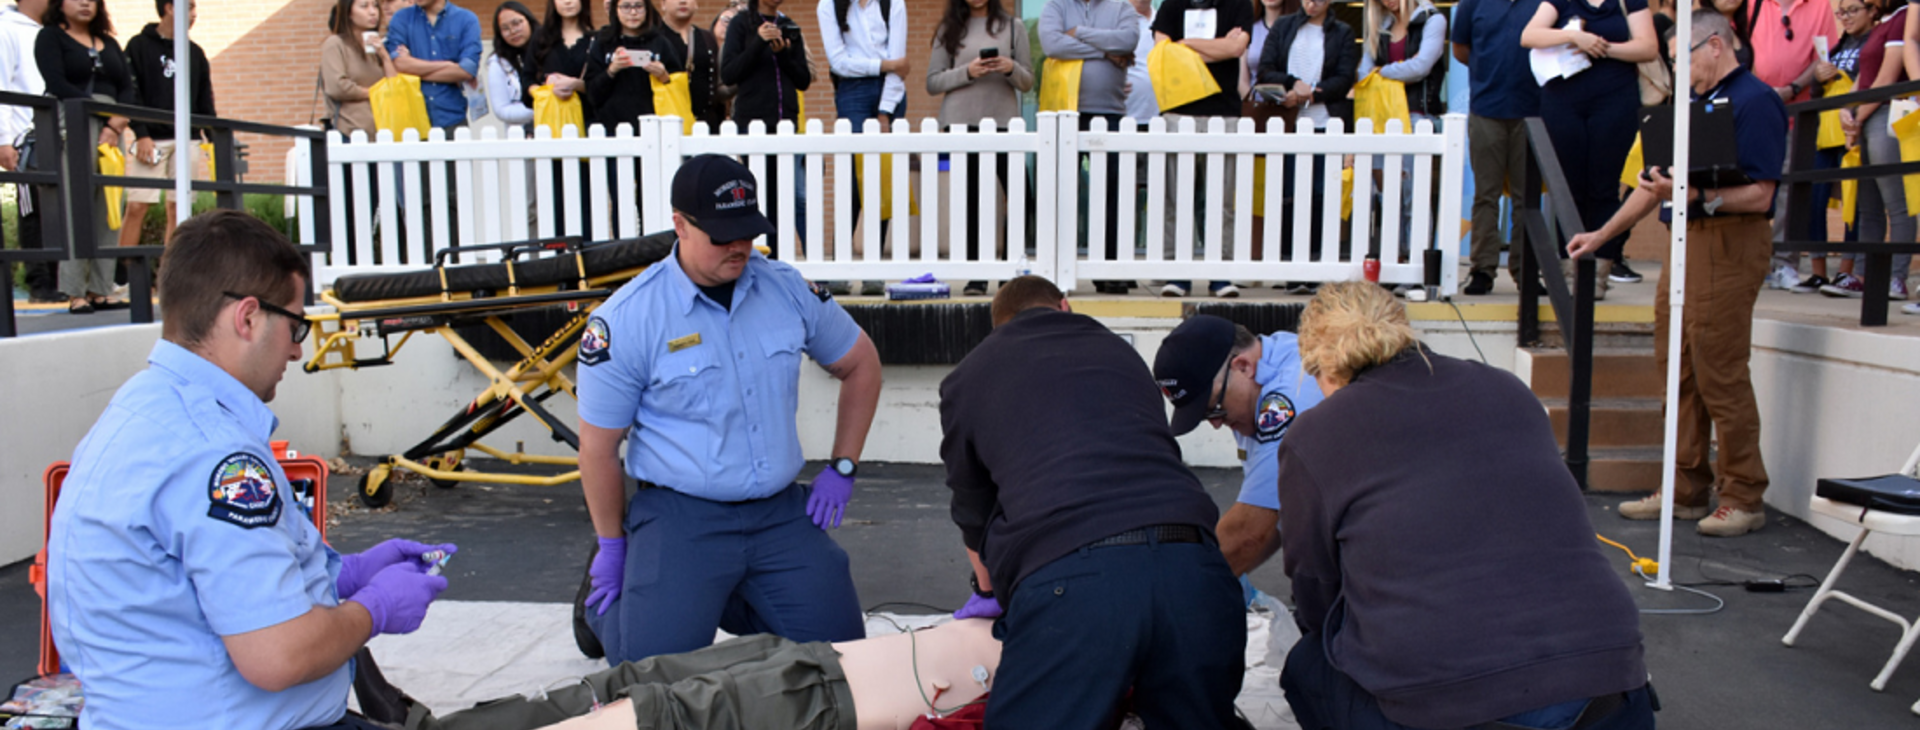 Paramedics demonstrating skills at the 2017 Open house